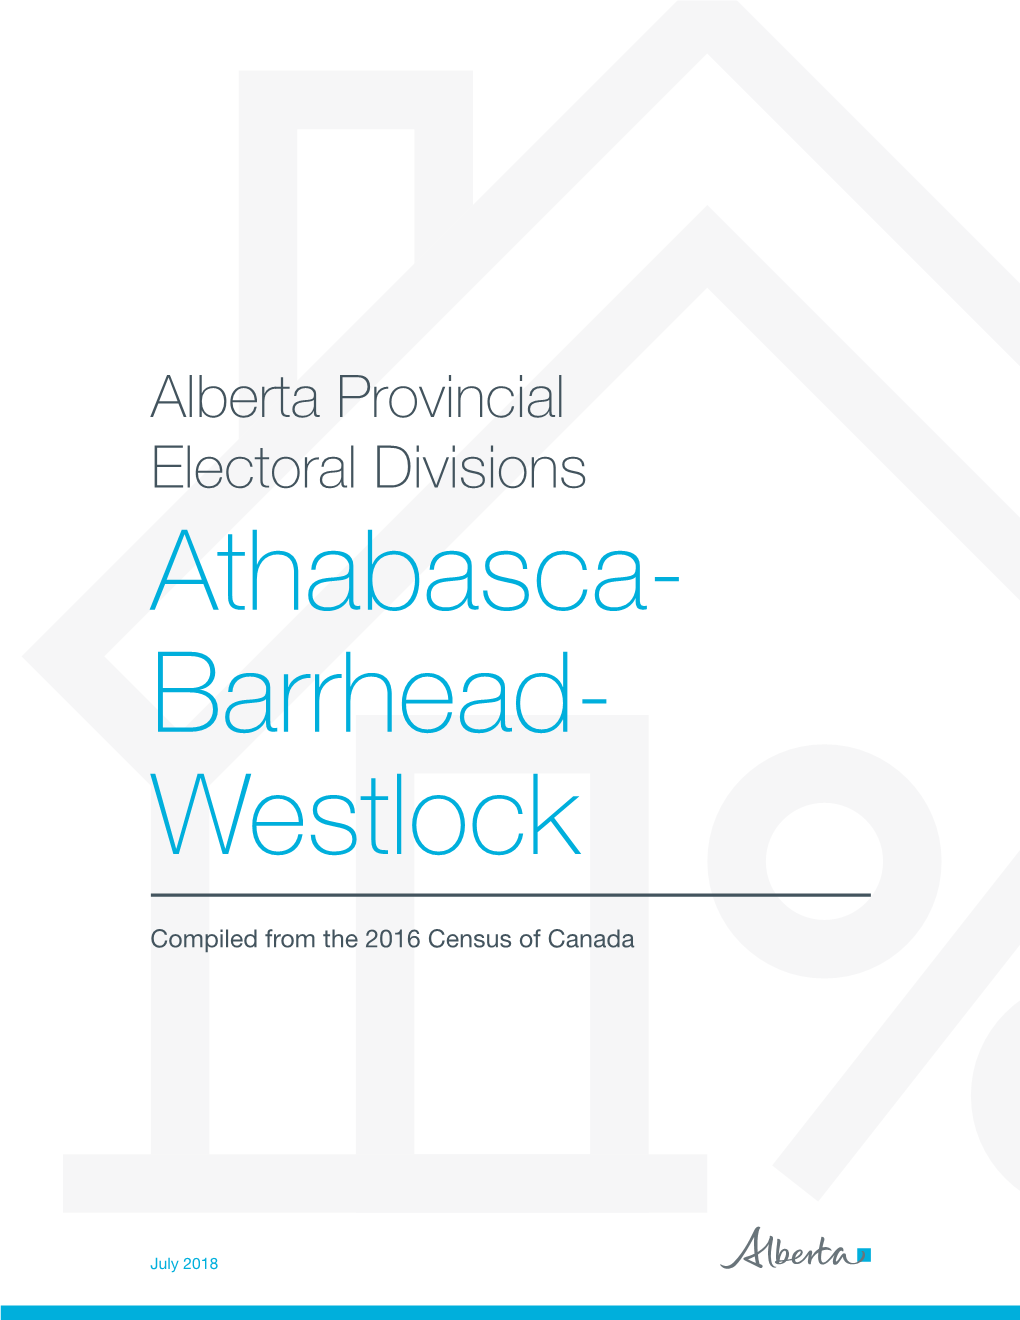 Athabasca- Barrhead- Westlock